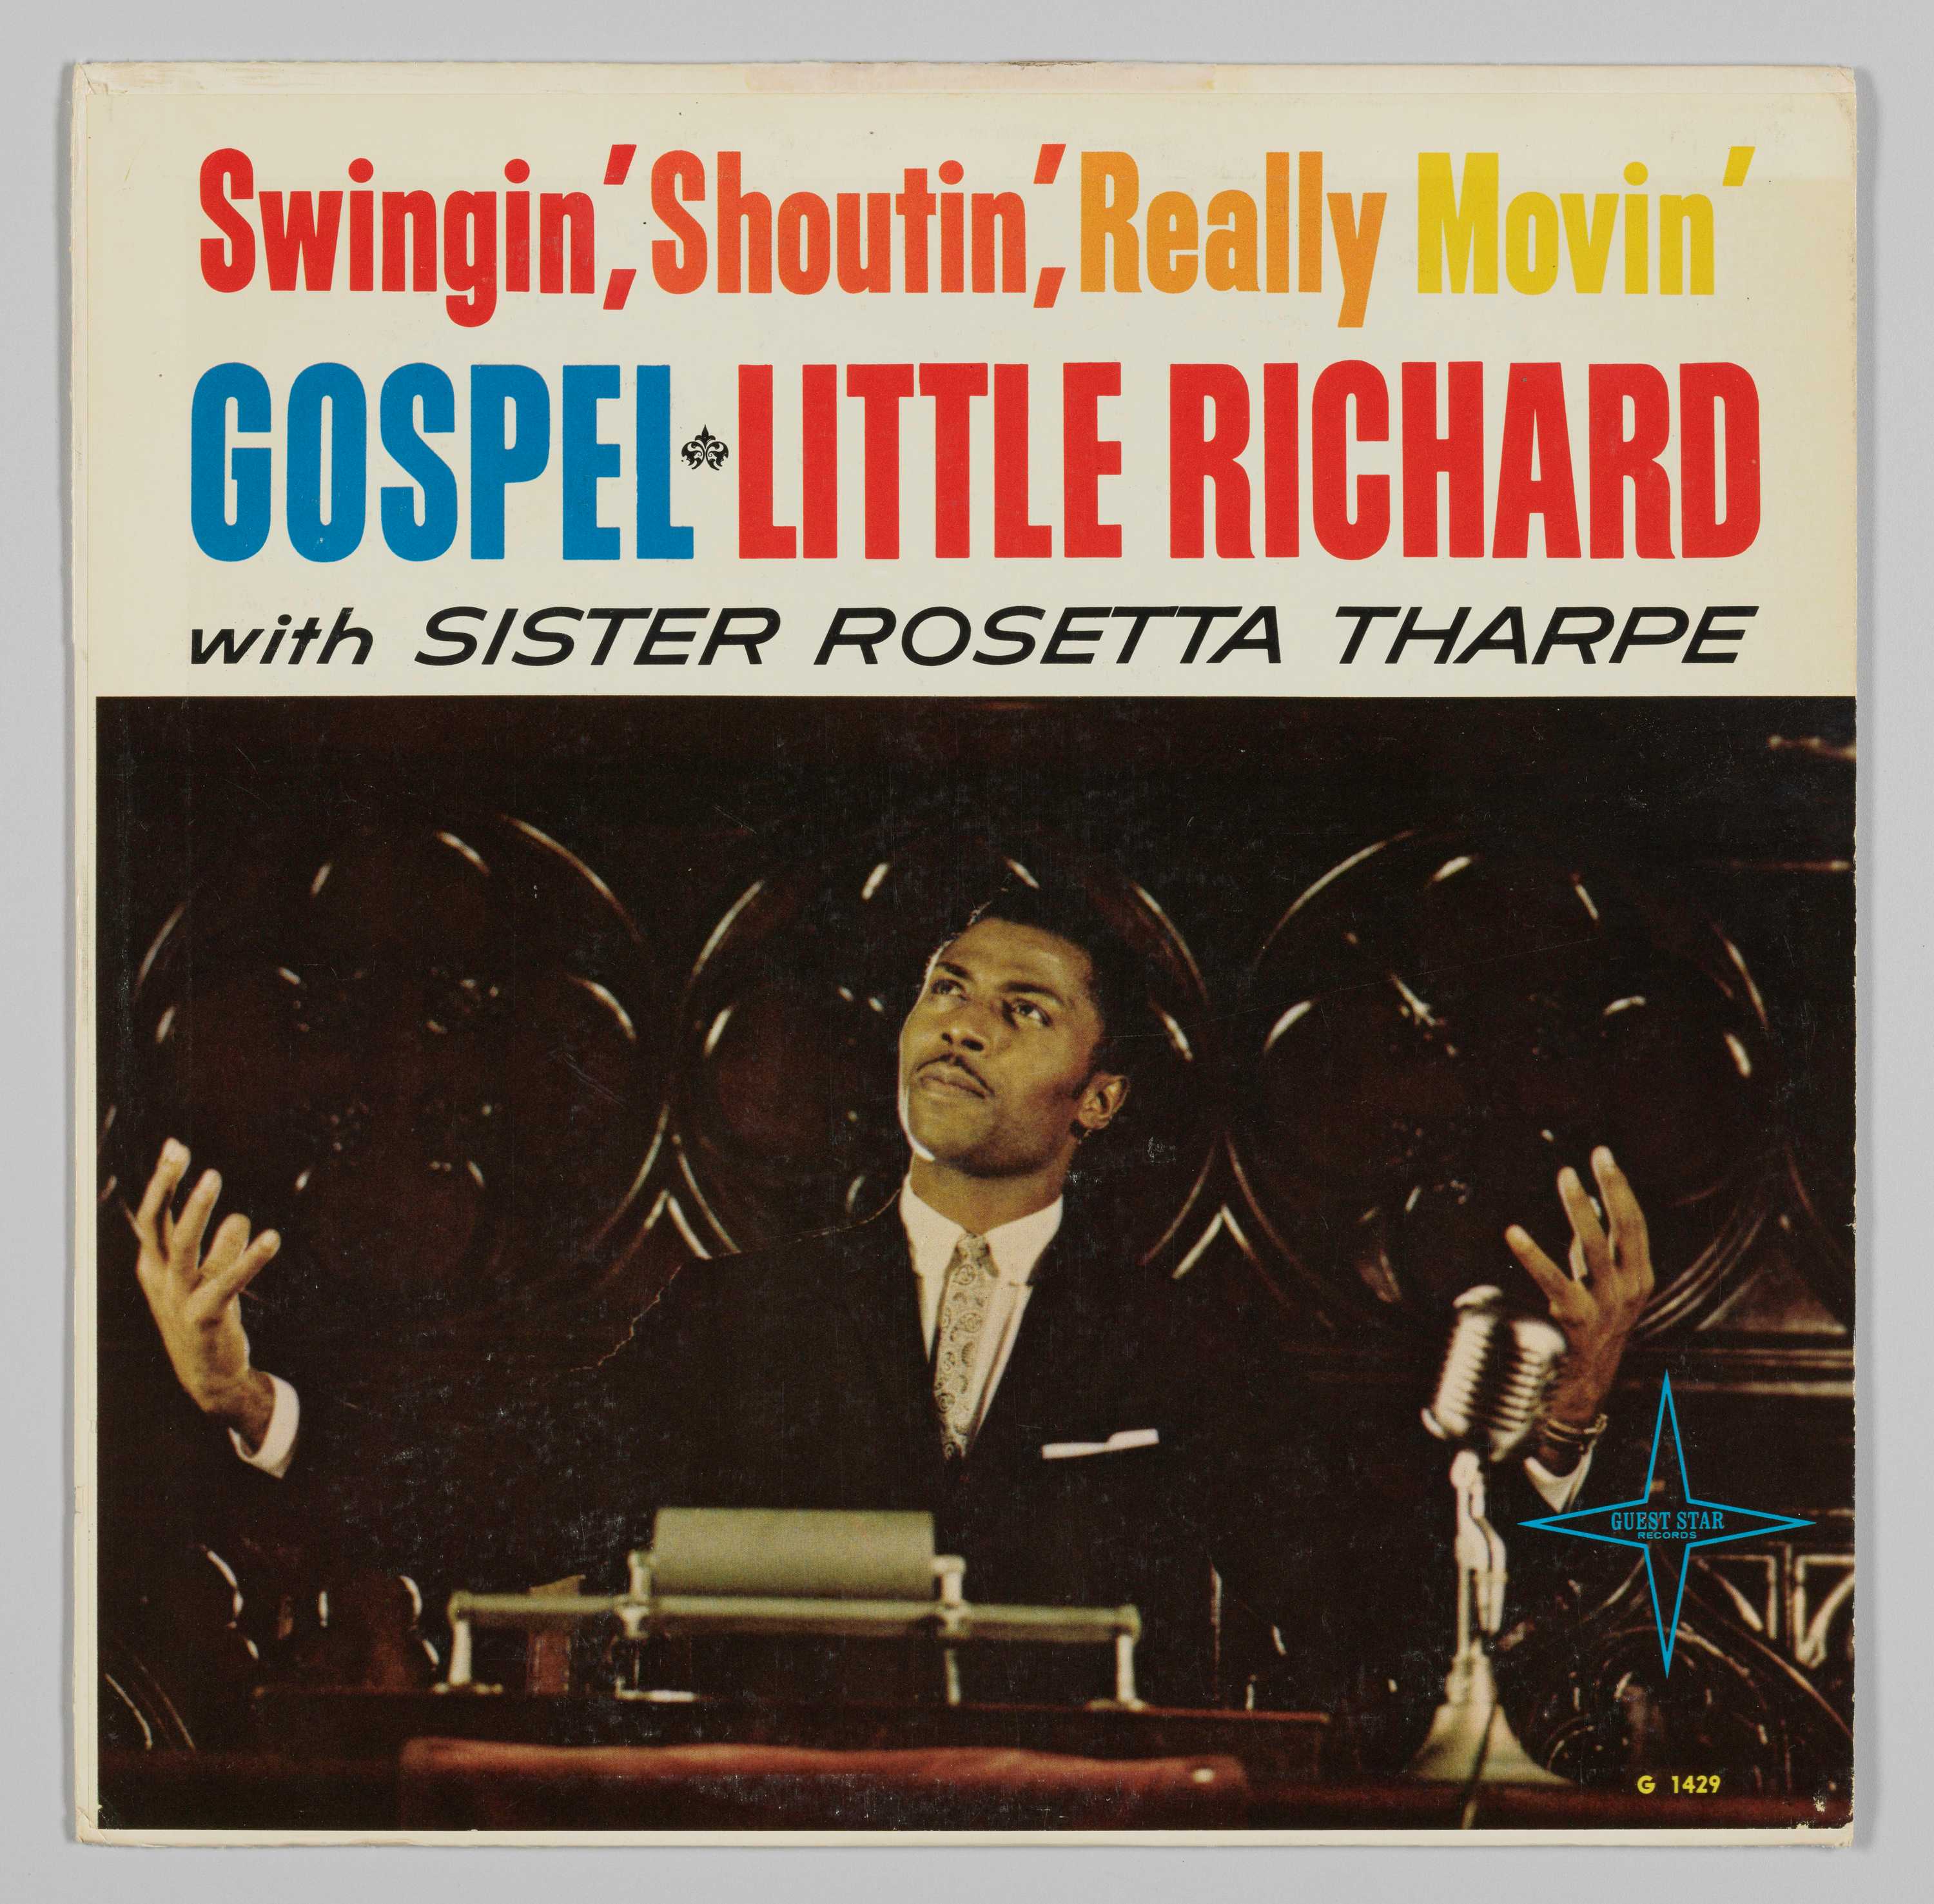 Image of the album jacket for Little Richard and Sister Rosetta Tharpe, Swingin', Shoutin', Really Movin' Gospel, Guest Star Records.